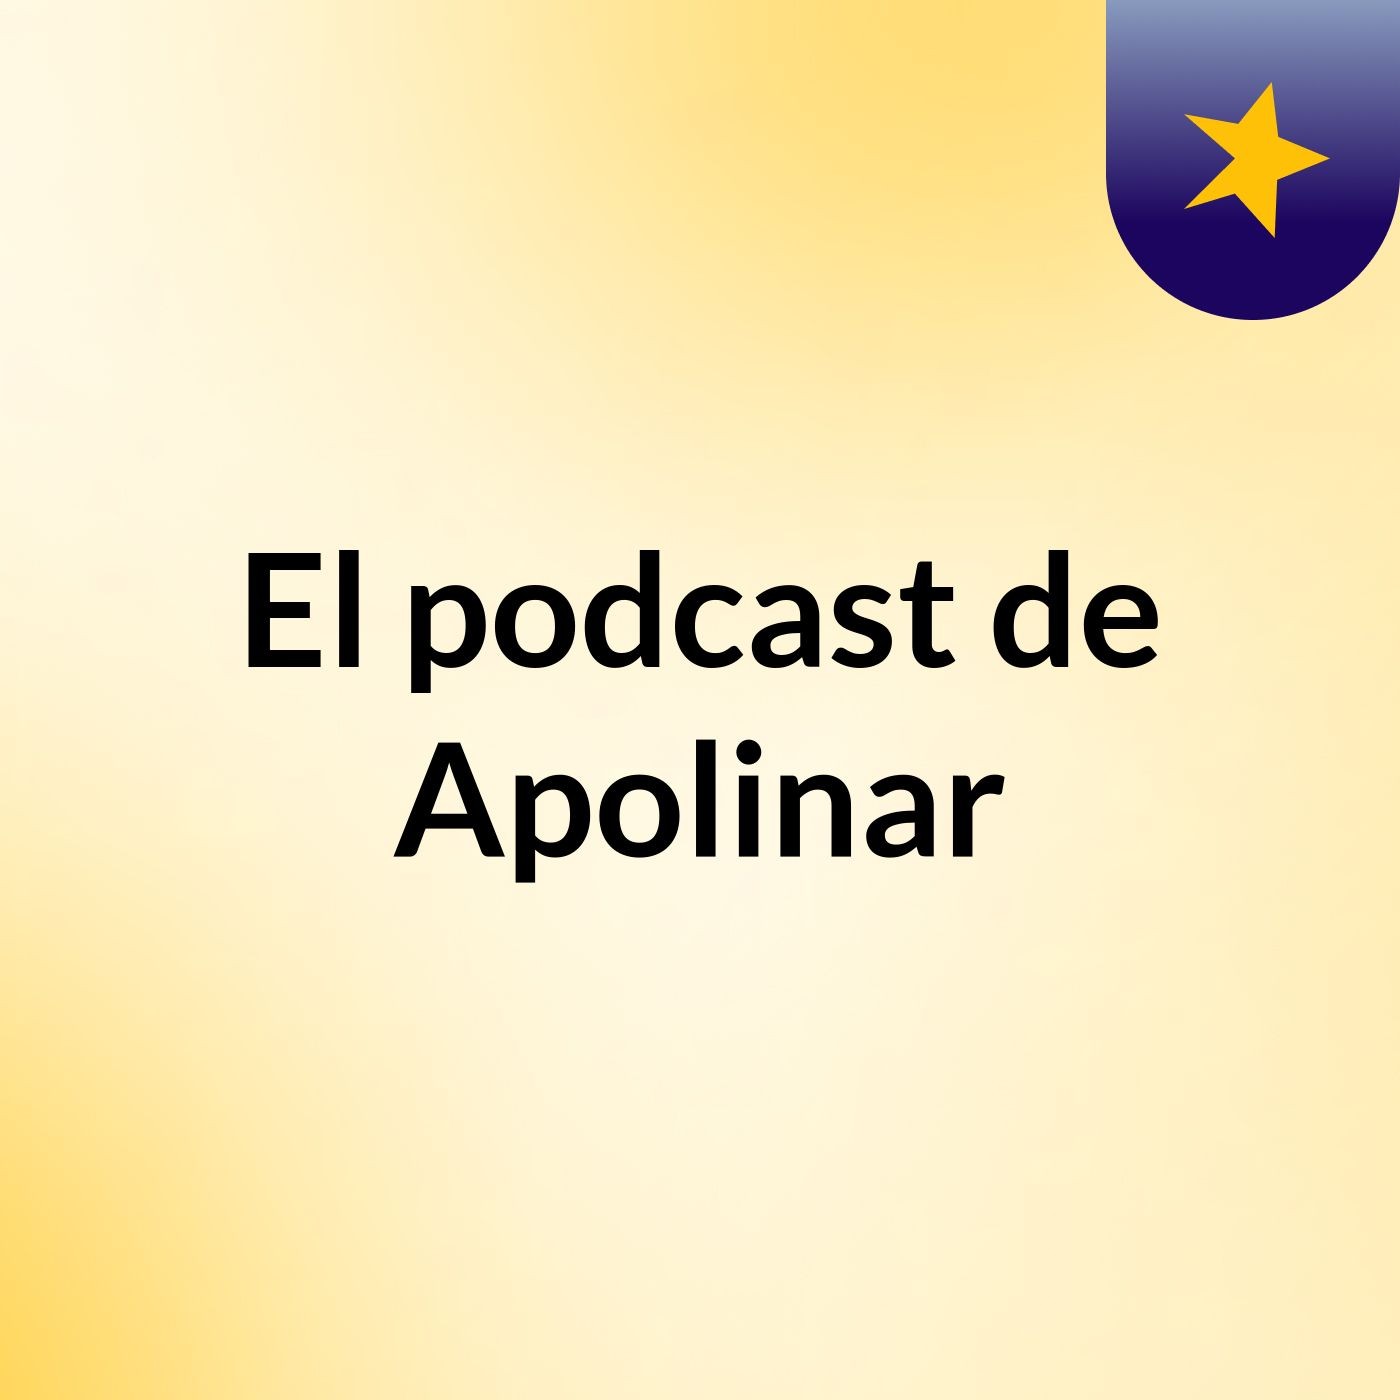 El podcast de Apolinar